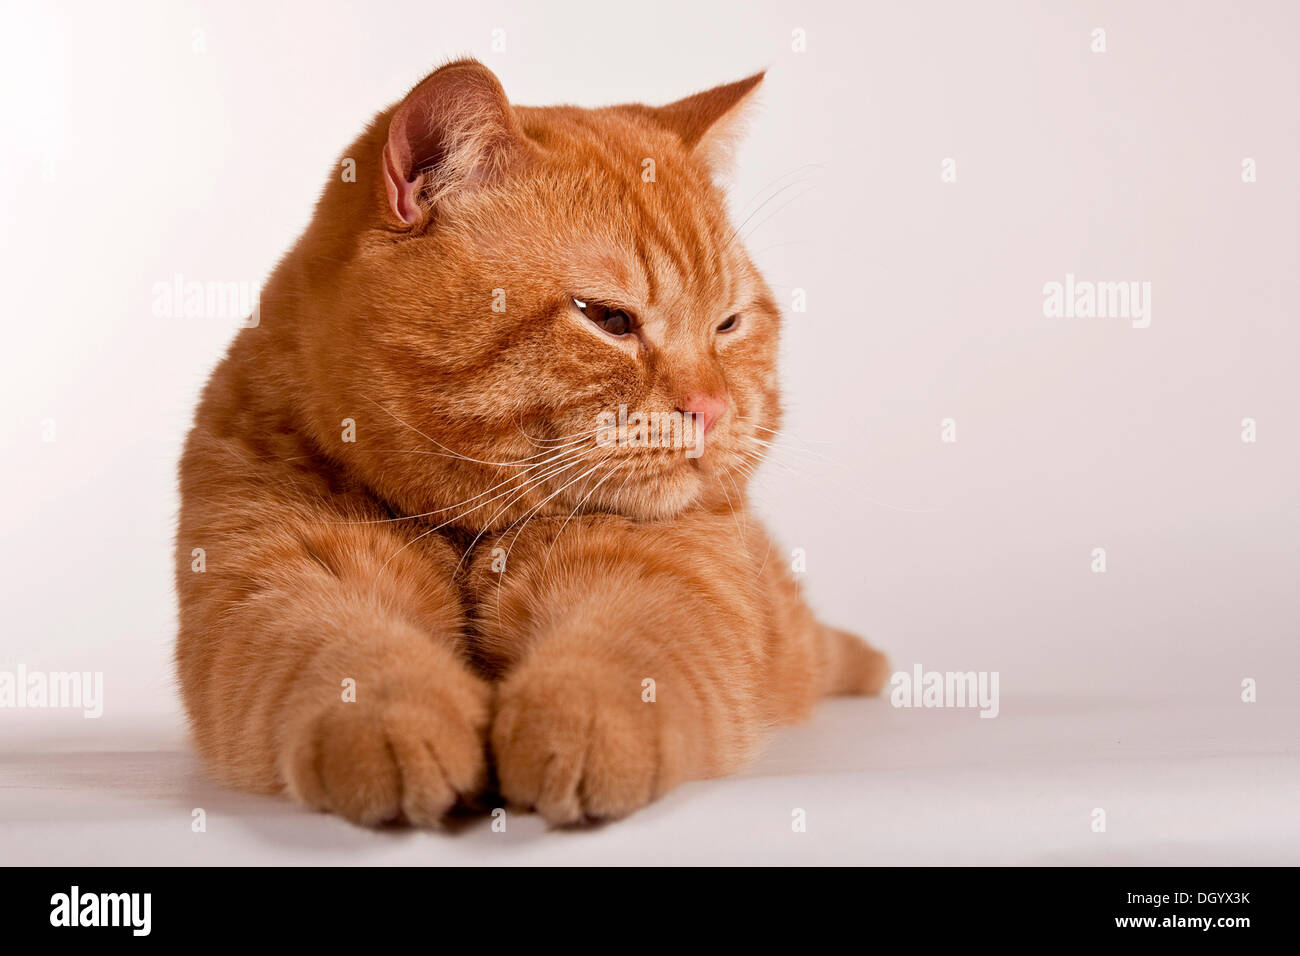 Red British Shorthair cat, studio portrait Stock Photo